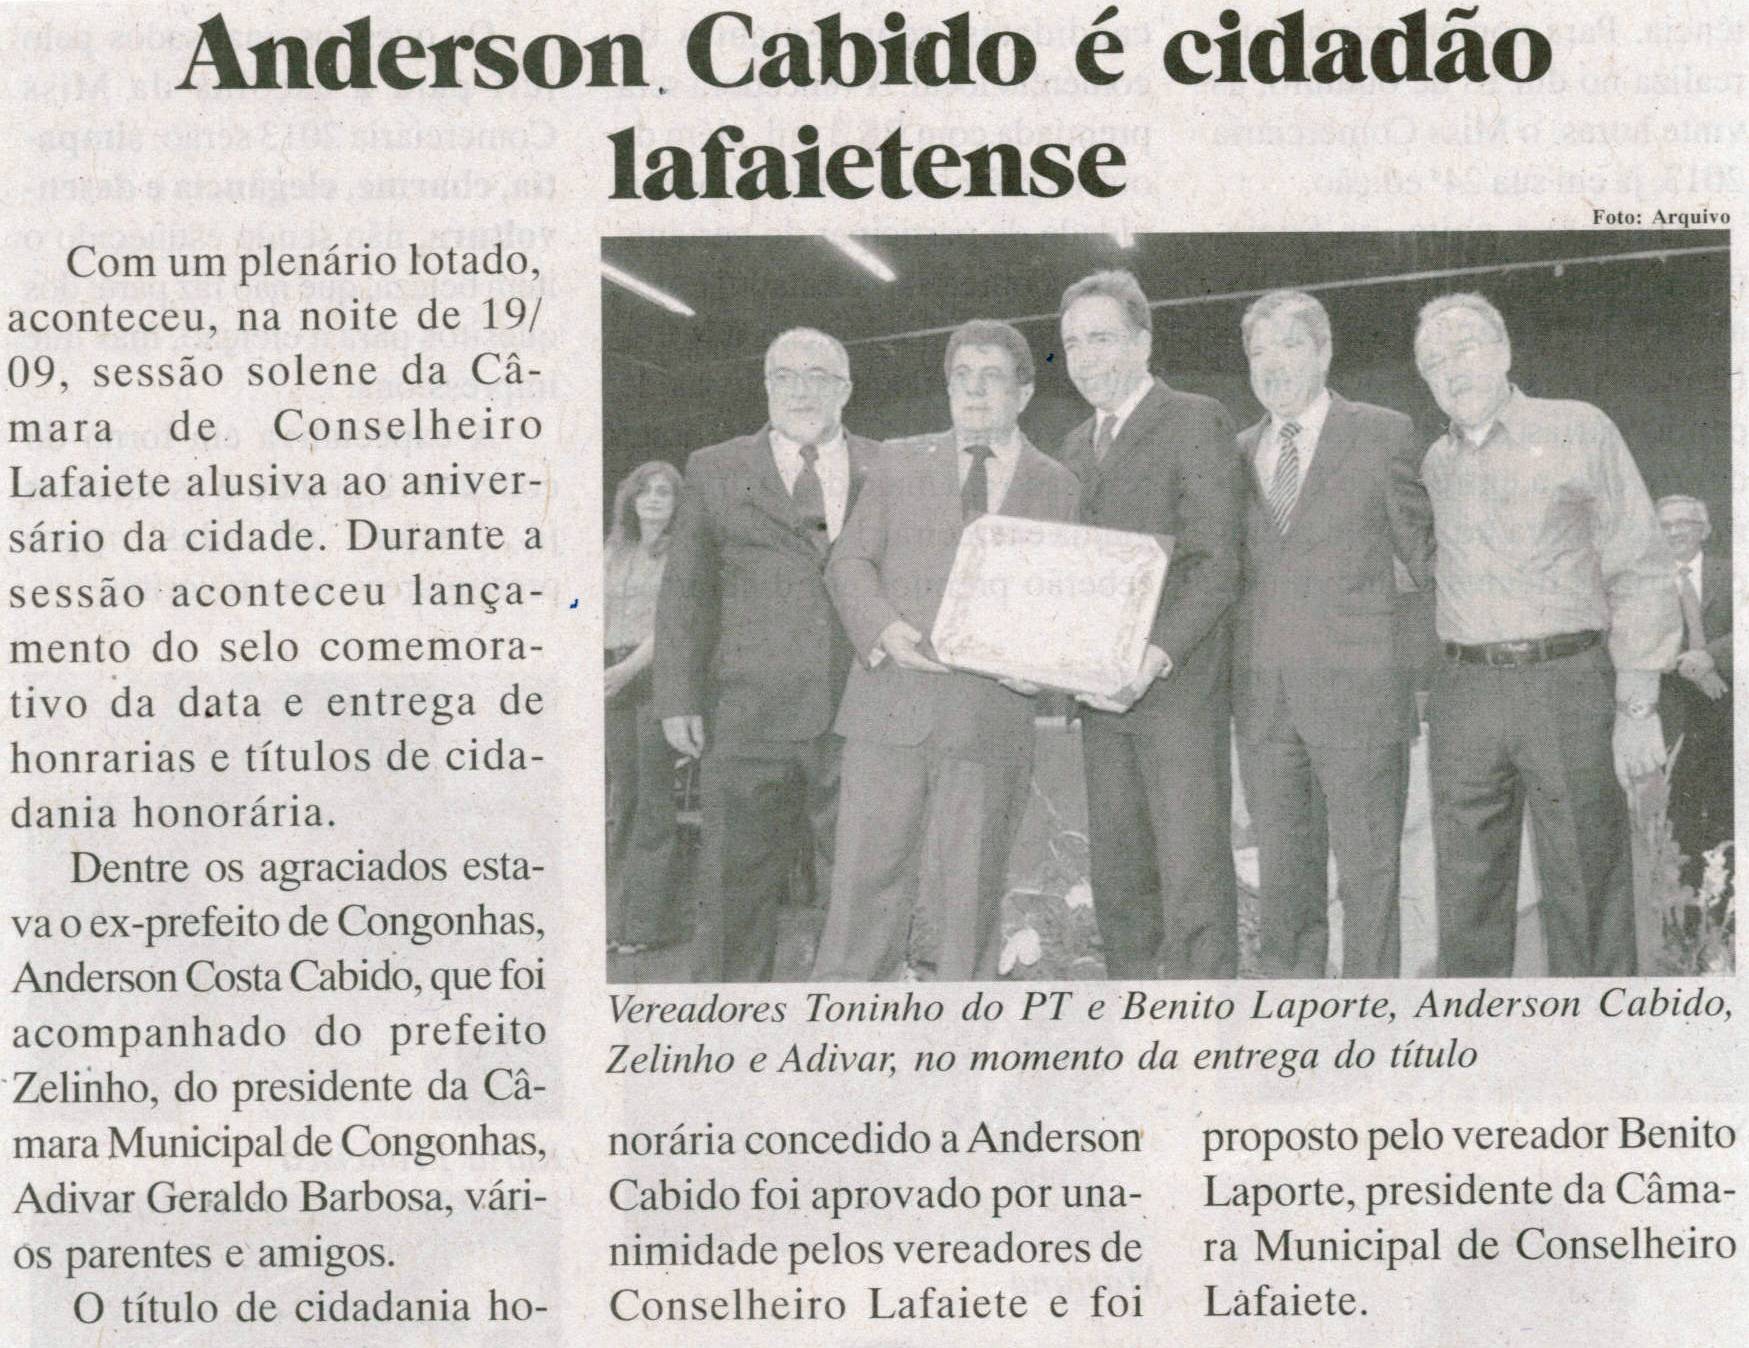 Anderson Cabido é cidadão lafaietense. Jornal Baruc, Congonhas, 1ª quinzena de out. de 2013, p. 07.